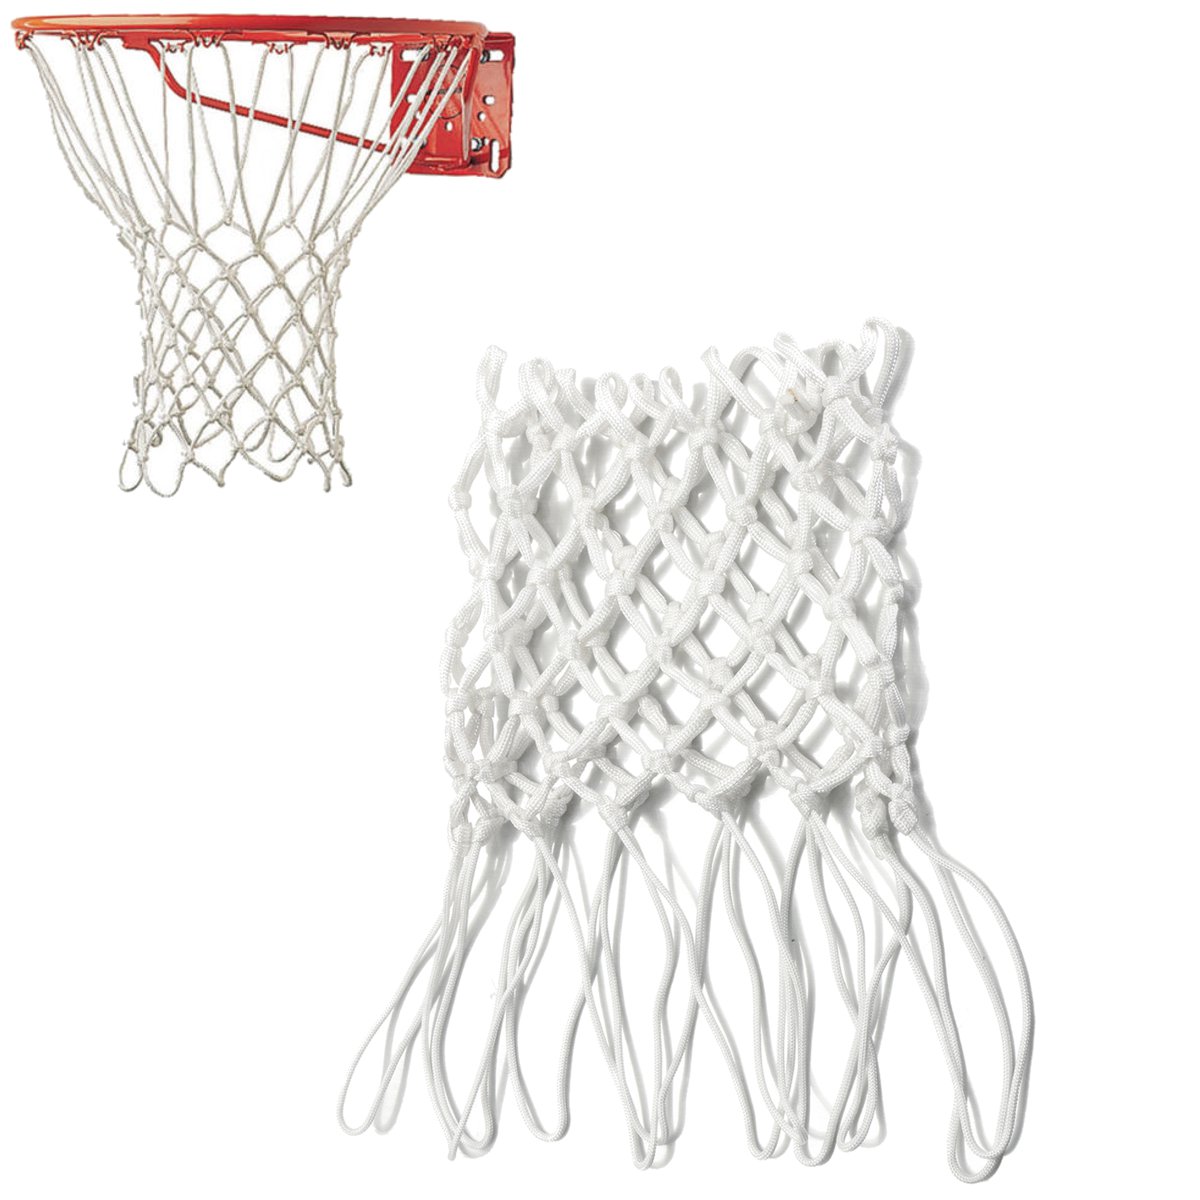 50cm-Kids-Basketball-Net-12-Loop-Basketball-Hoop-Mesh-Professional-Replacement-Net-Children-Outdoor--1195083-2